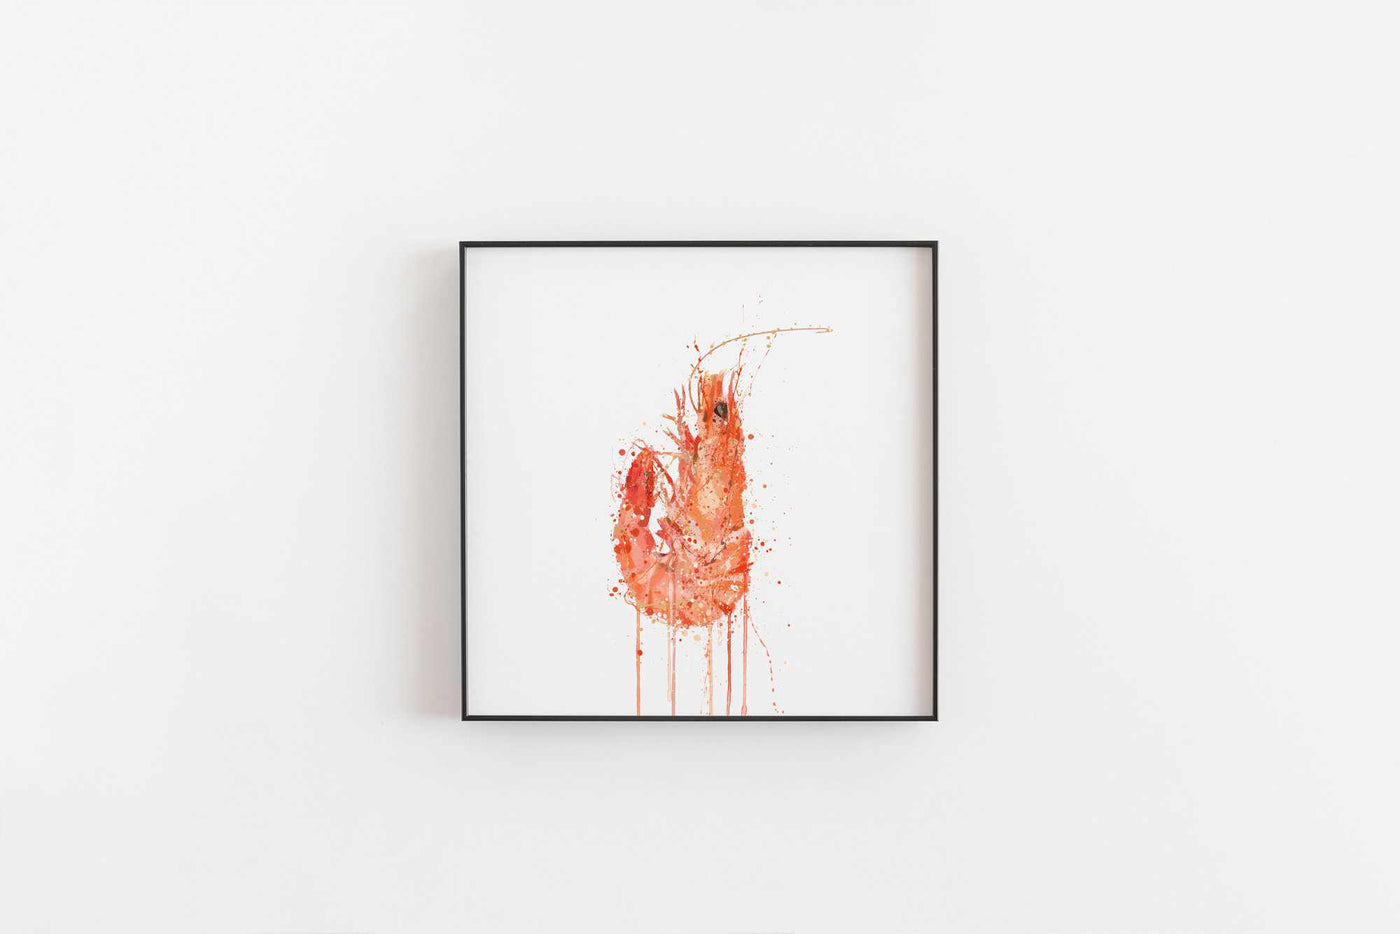 Seafood Wall Art Print 'Prawn'-We Love Prints